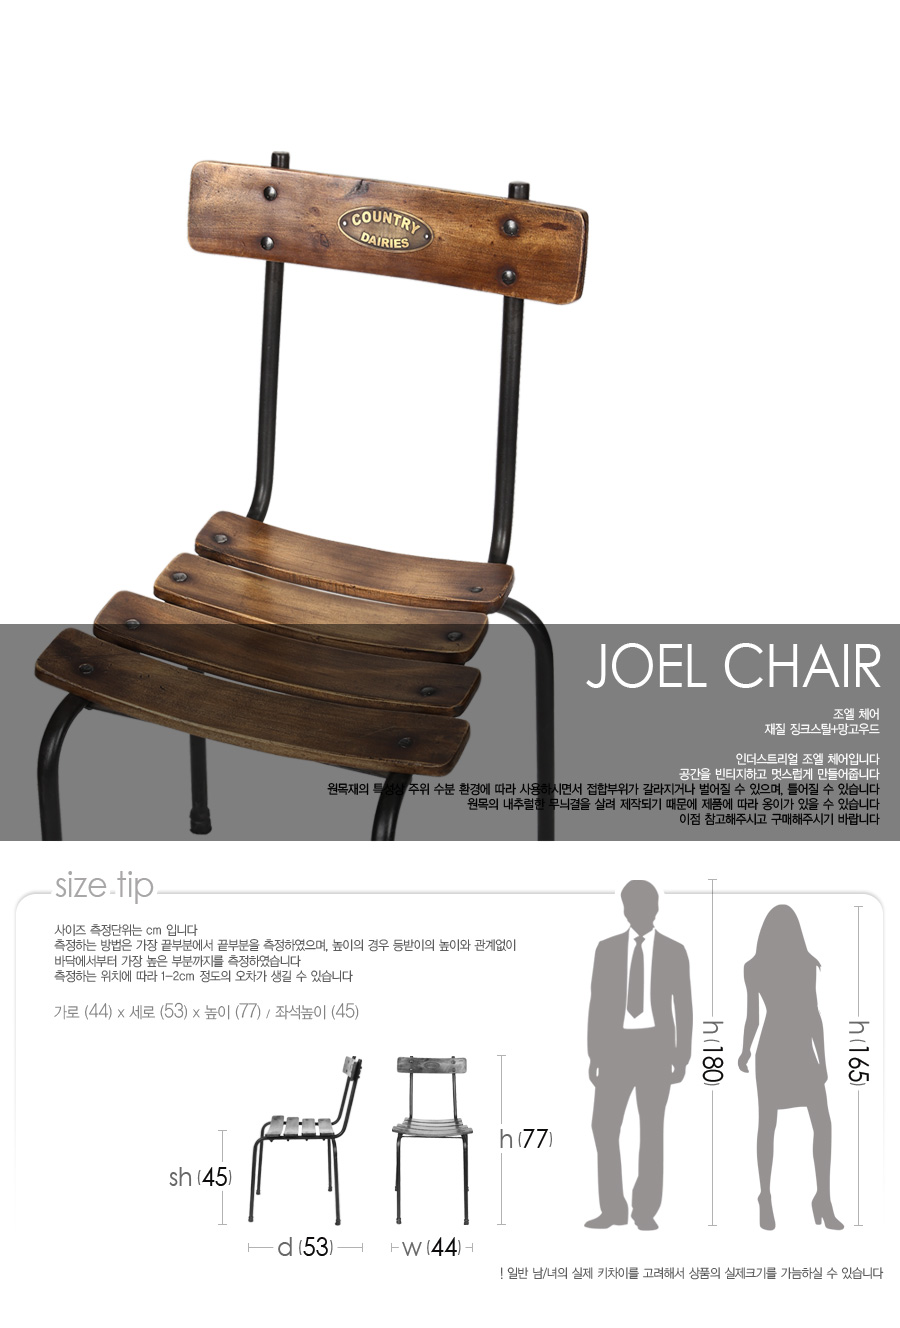 joel-chair_01.jpg